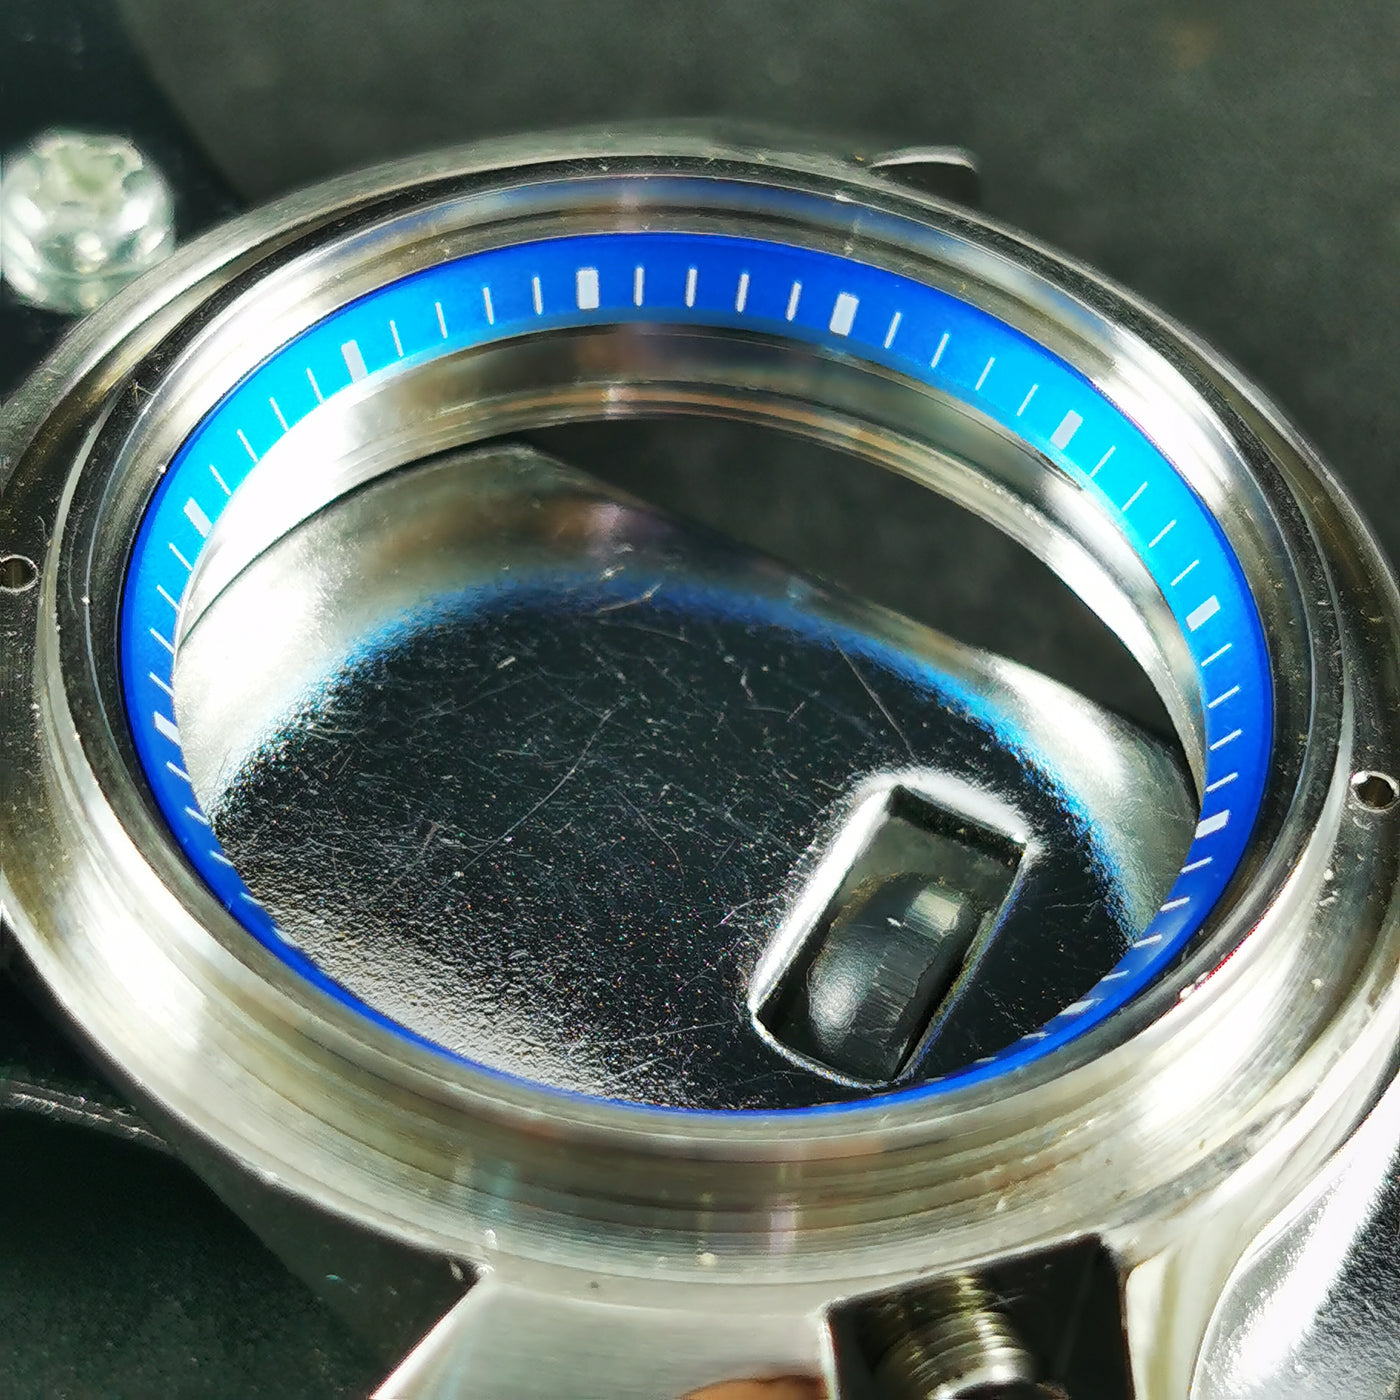 C0186 SKX007/SRPD Chapter Ring - Light Blue with White Marker